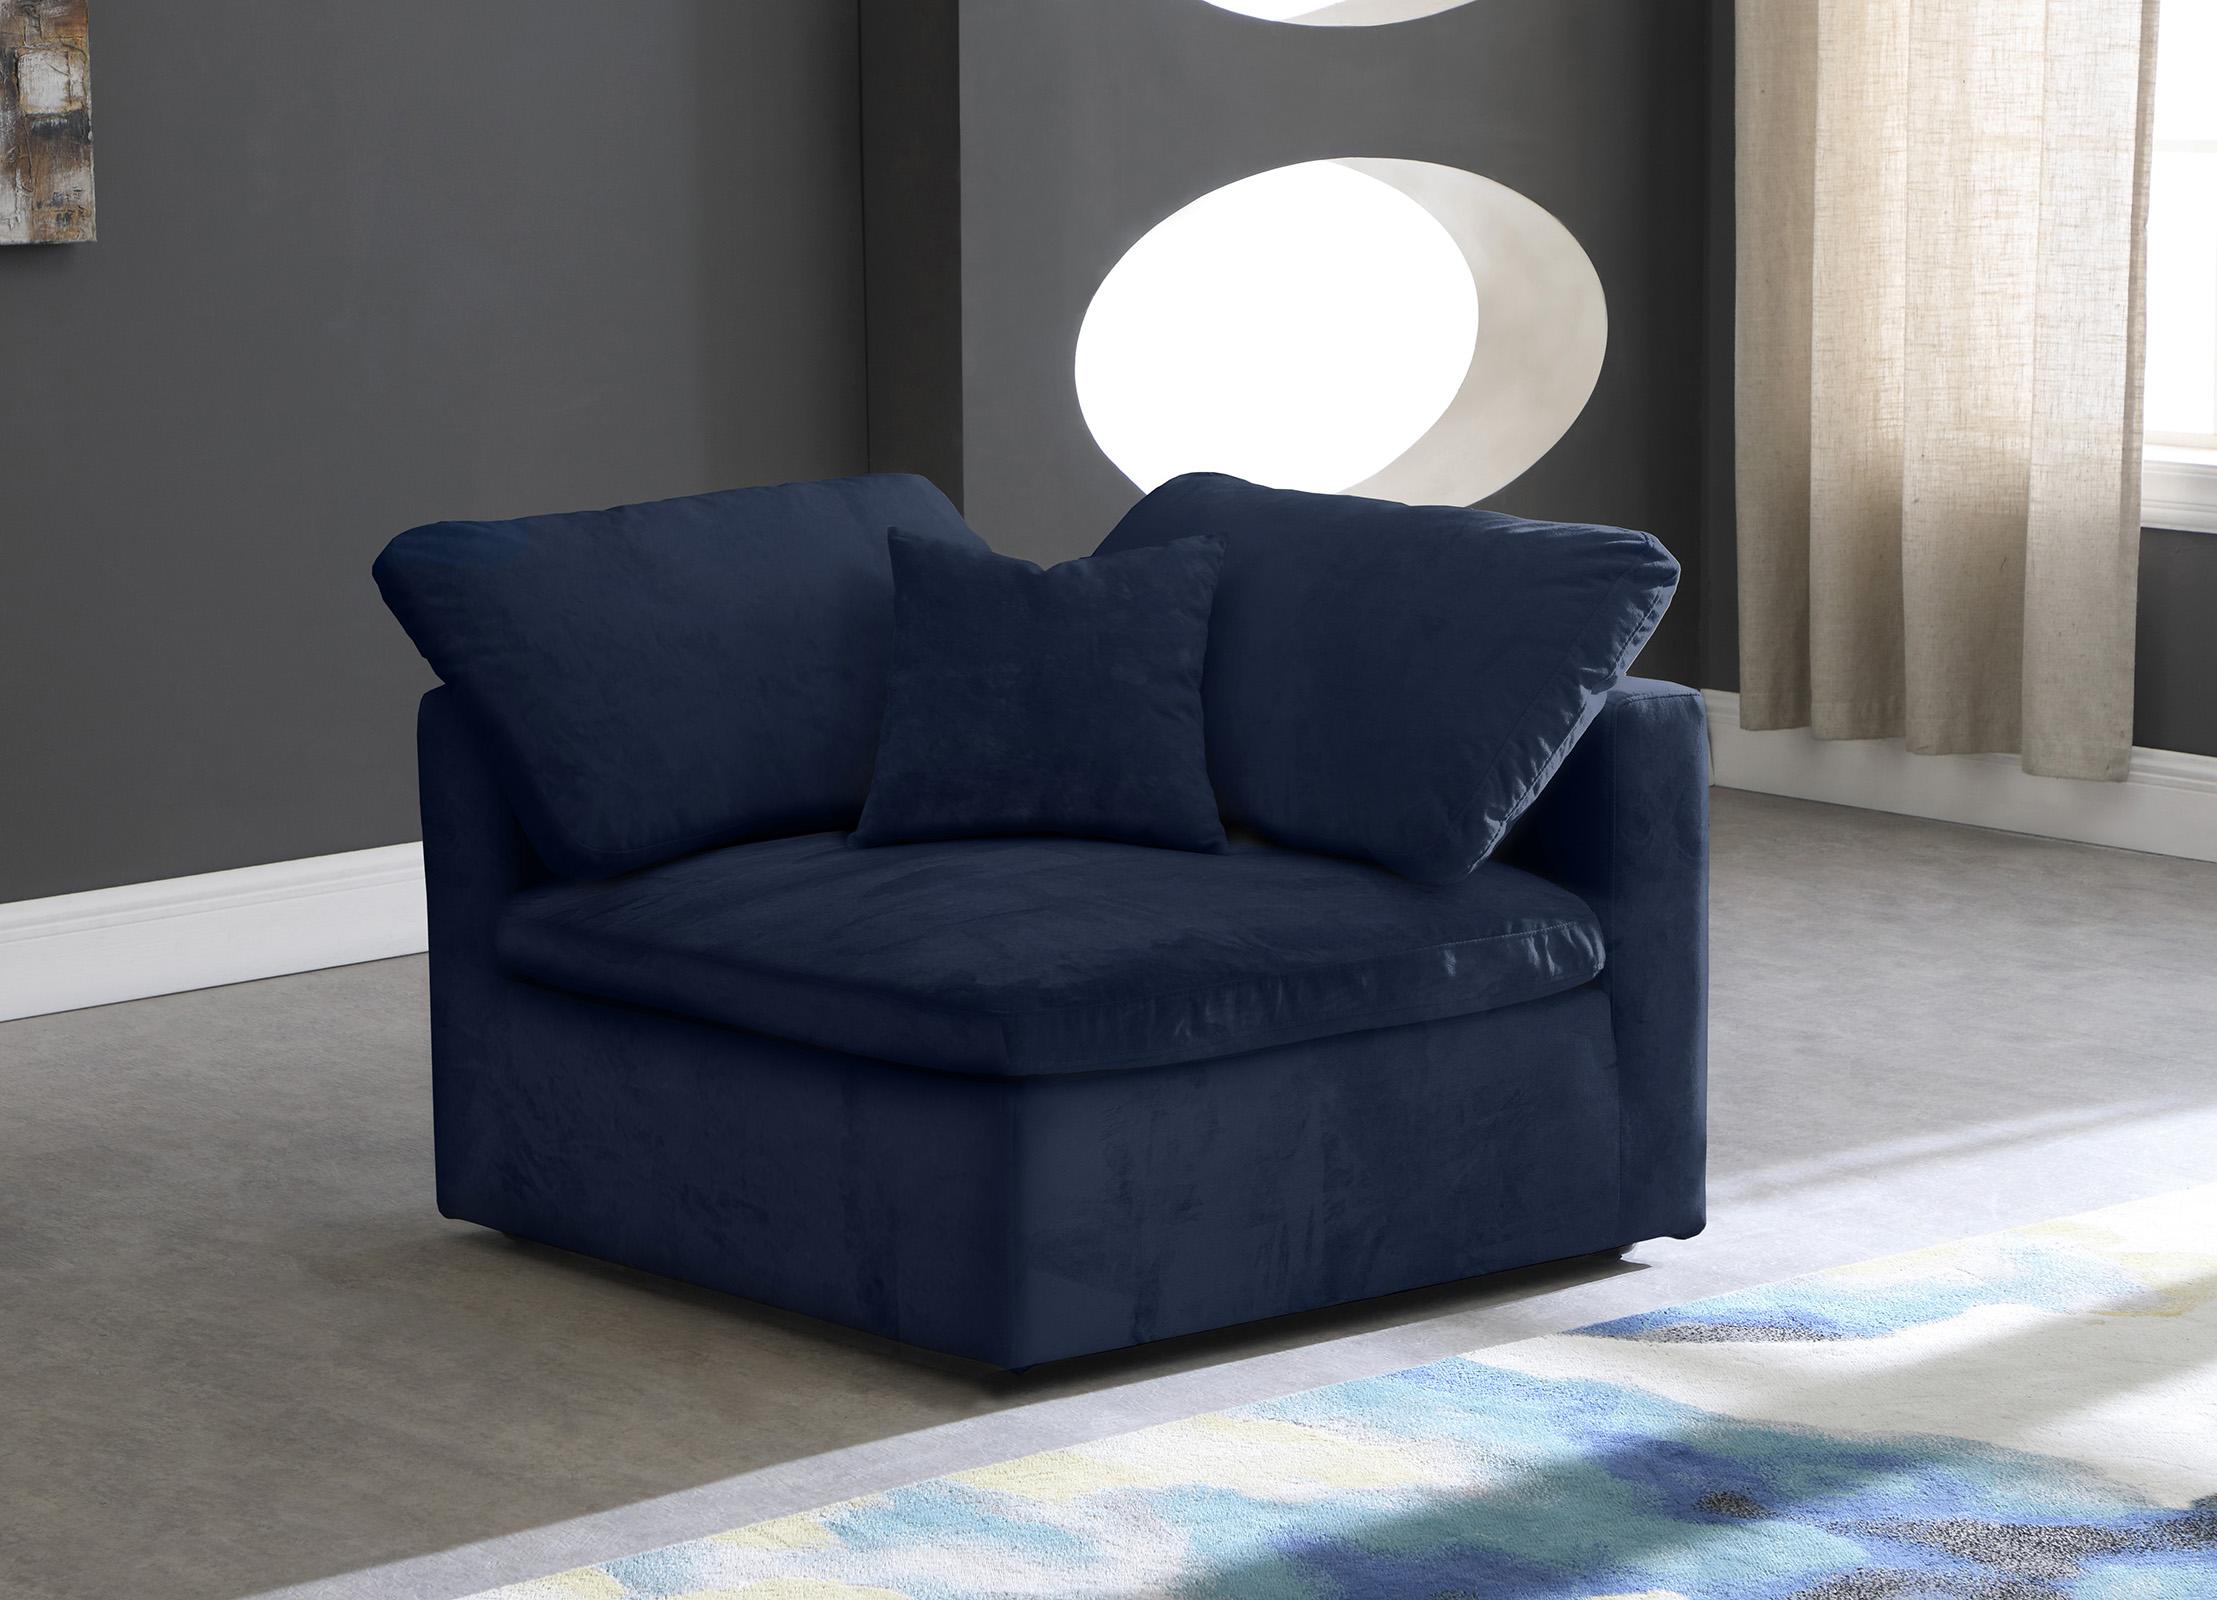 

    
Cozy Navy Velvet Modular Fiber Filled Comfort Overstuffed Corner Chair Meridian
